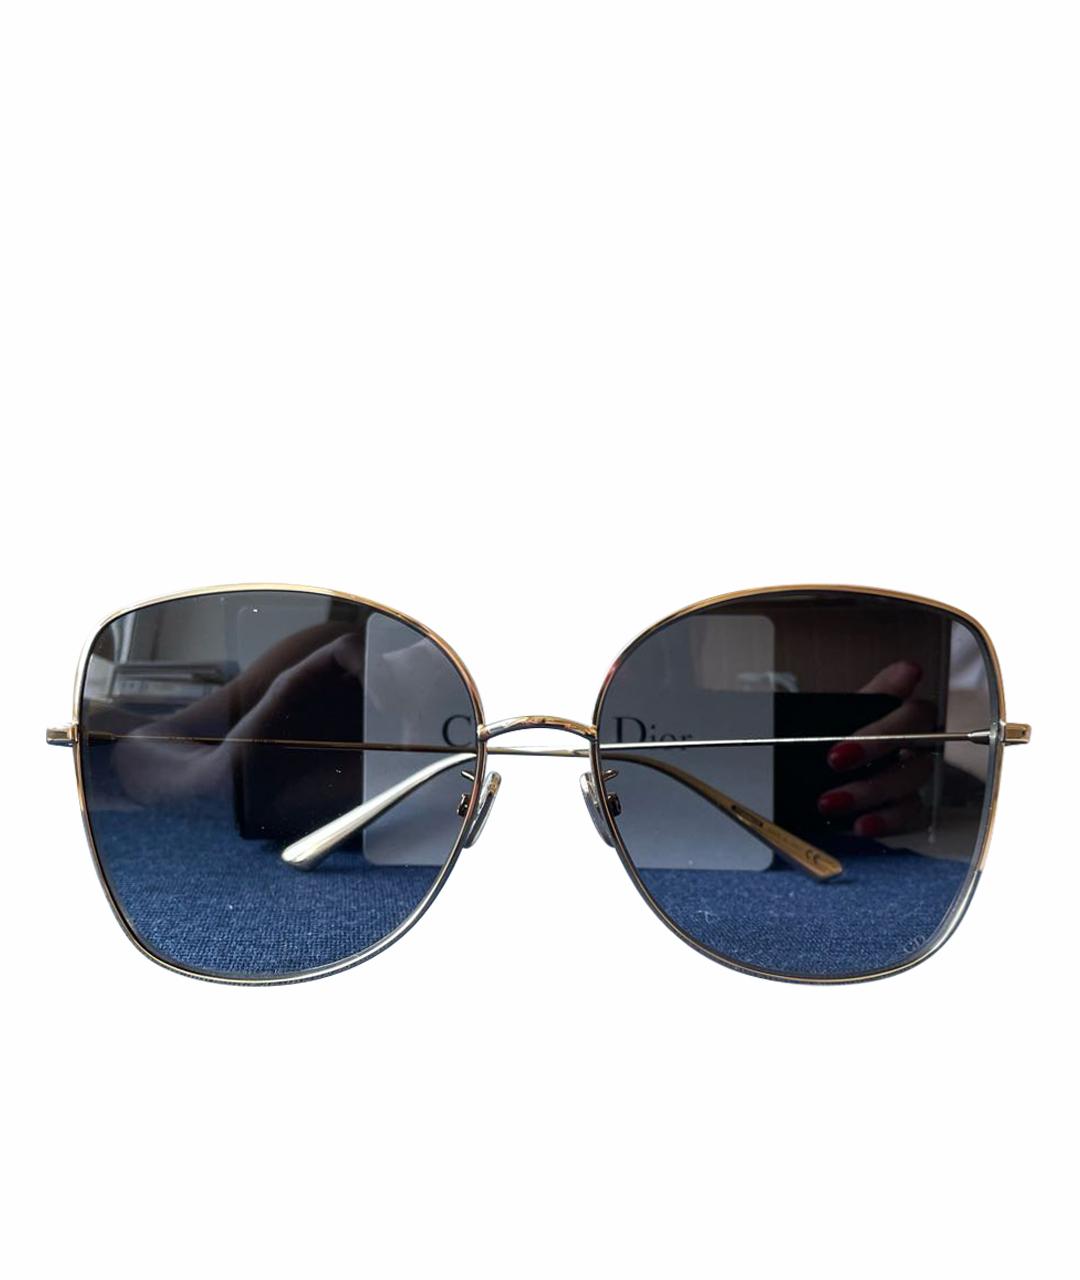 CHRISTIAN DIOR PRE-OWNED Золотые металлические солнцезащитные очки, фото 1